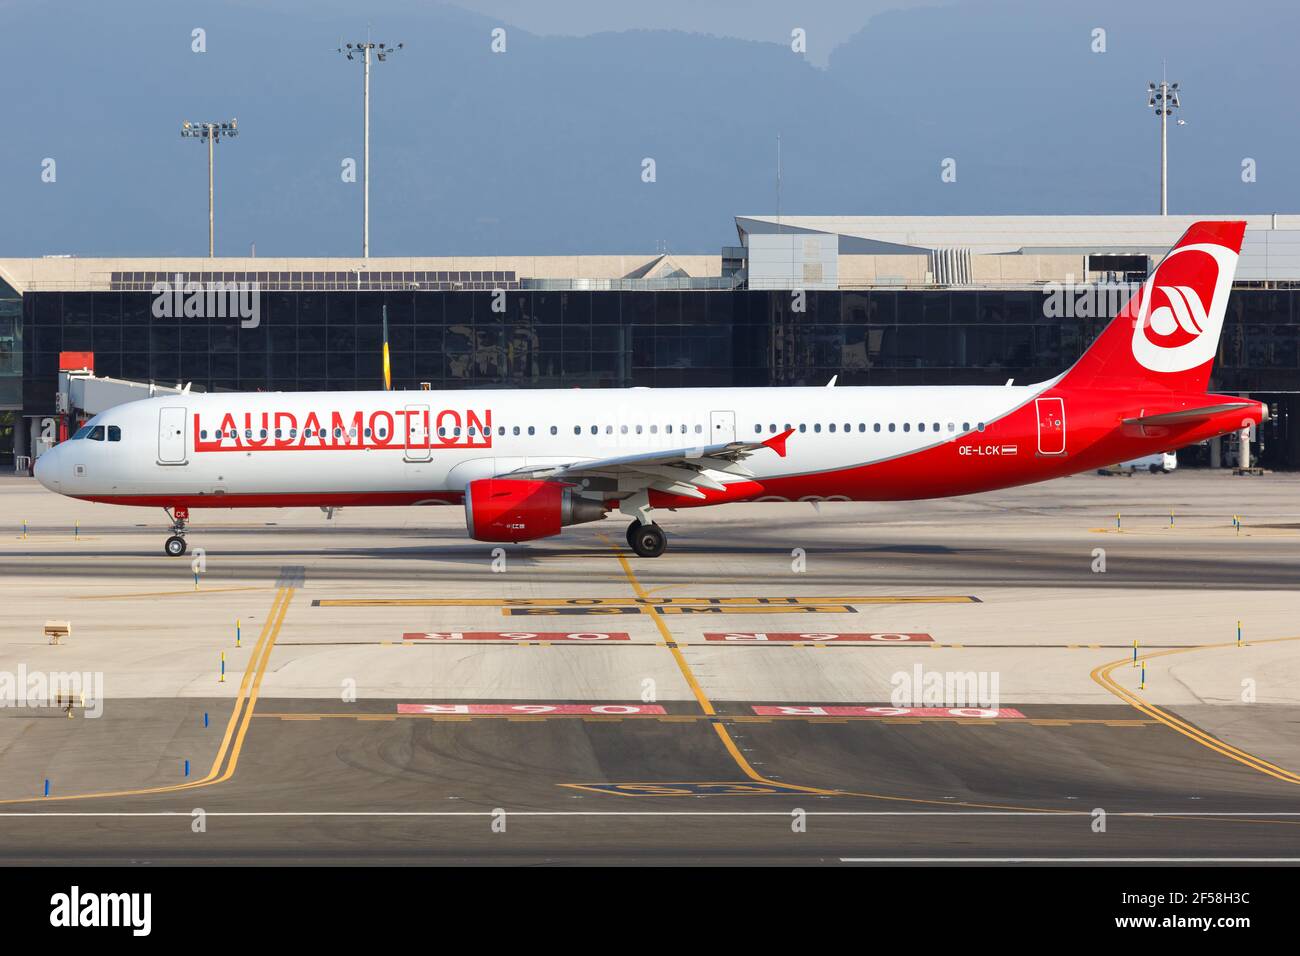 Palma de Mallorca, Spanien - 22. Juli 2018: Laudamotion Airbus A321 Flugzeug am Flughafen Palma de Mallorca in Spanien. Airbus ist ein europäisches Flugzeugmanufa Stockfoto